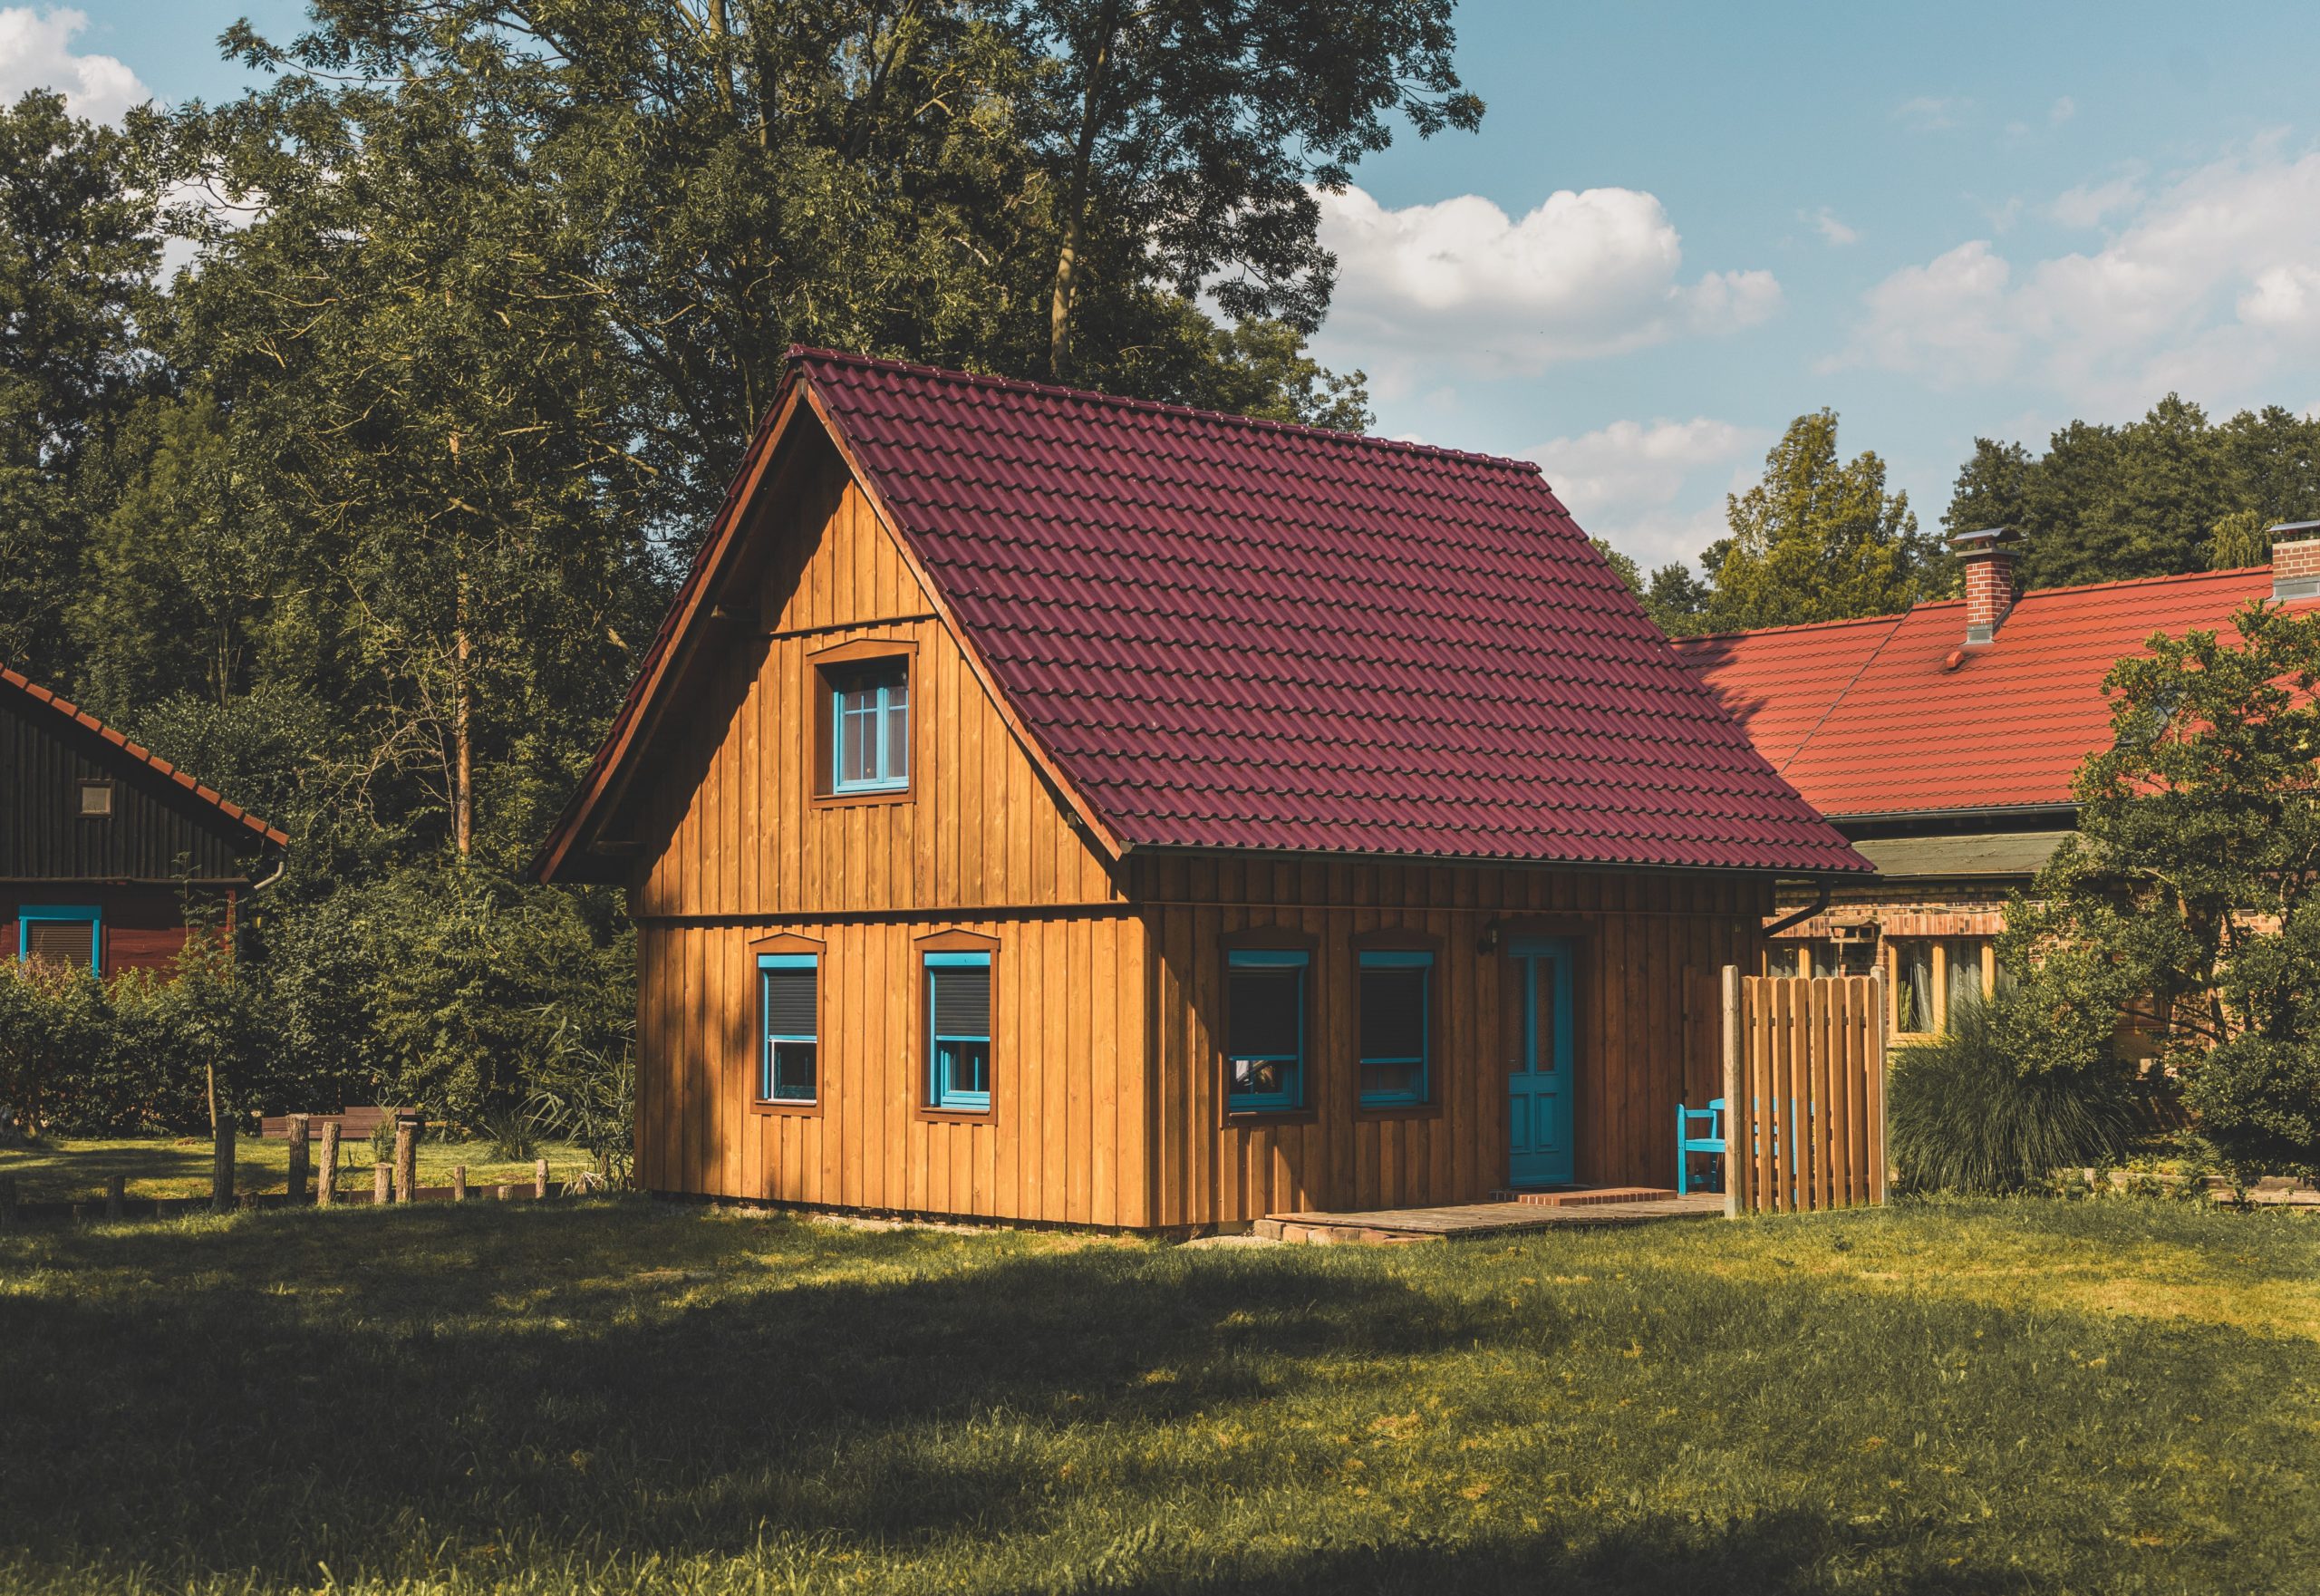 Casas de madera baratas para vivir scaled - Tipos de casas prefabricadas